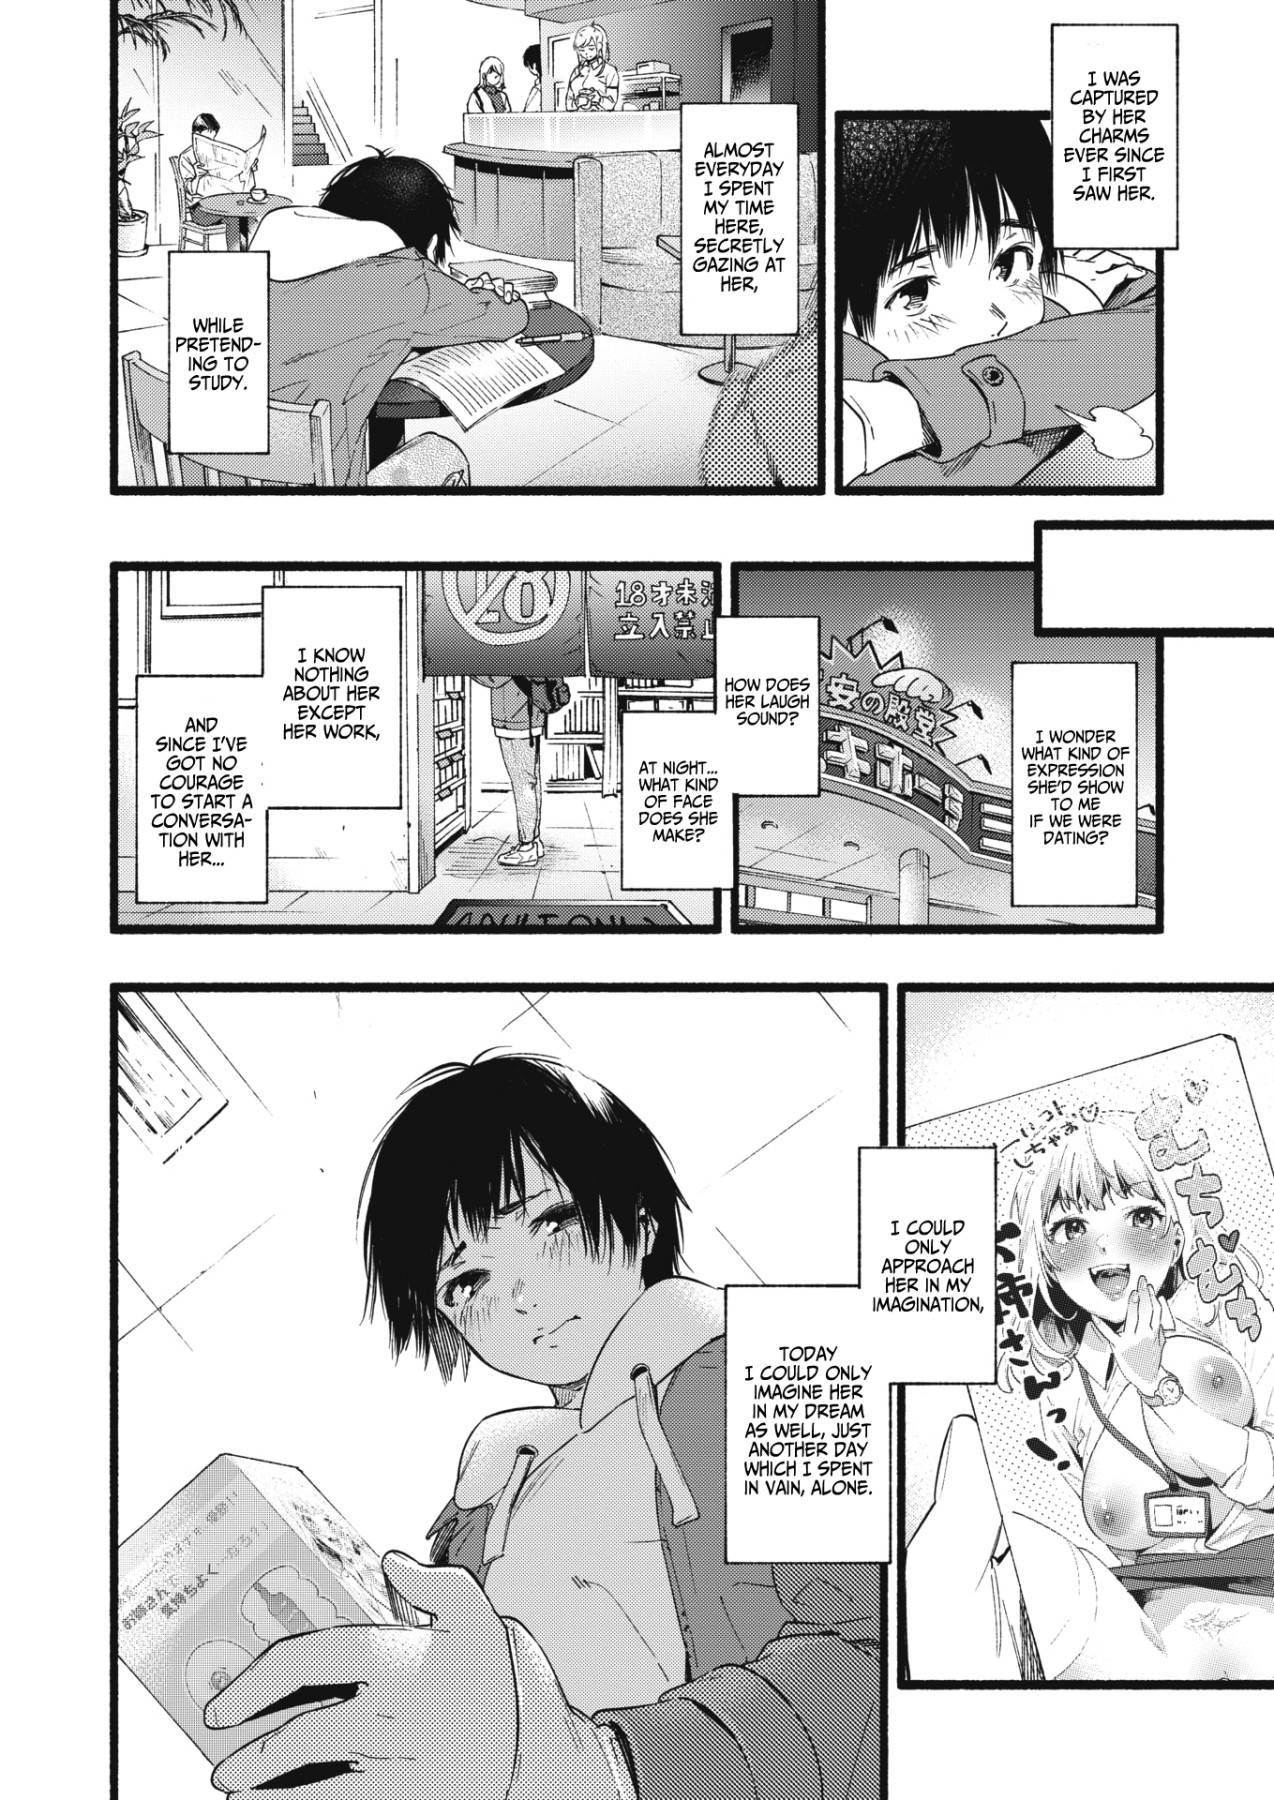 Hentai Manga Comic-OVER OVER OVER!-Read-2